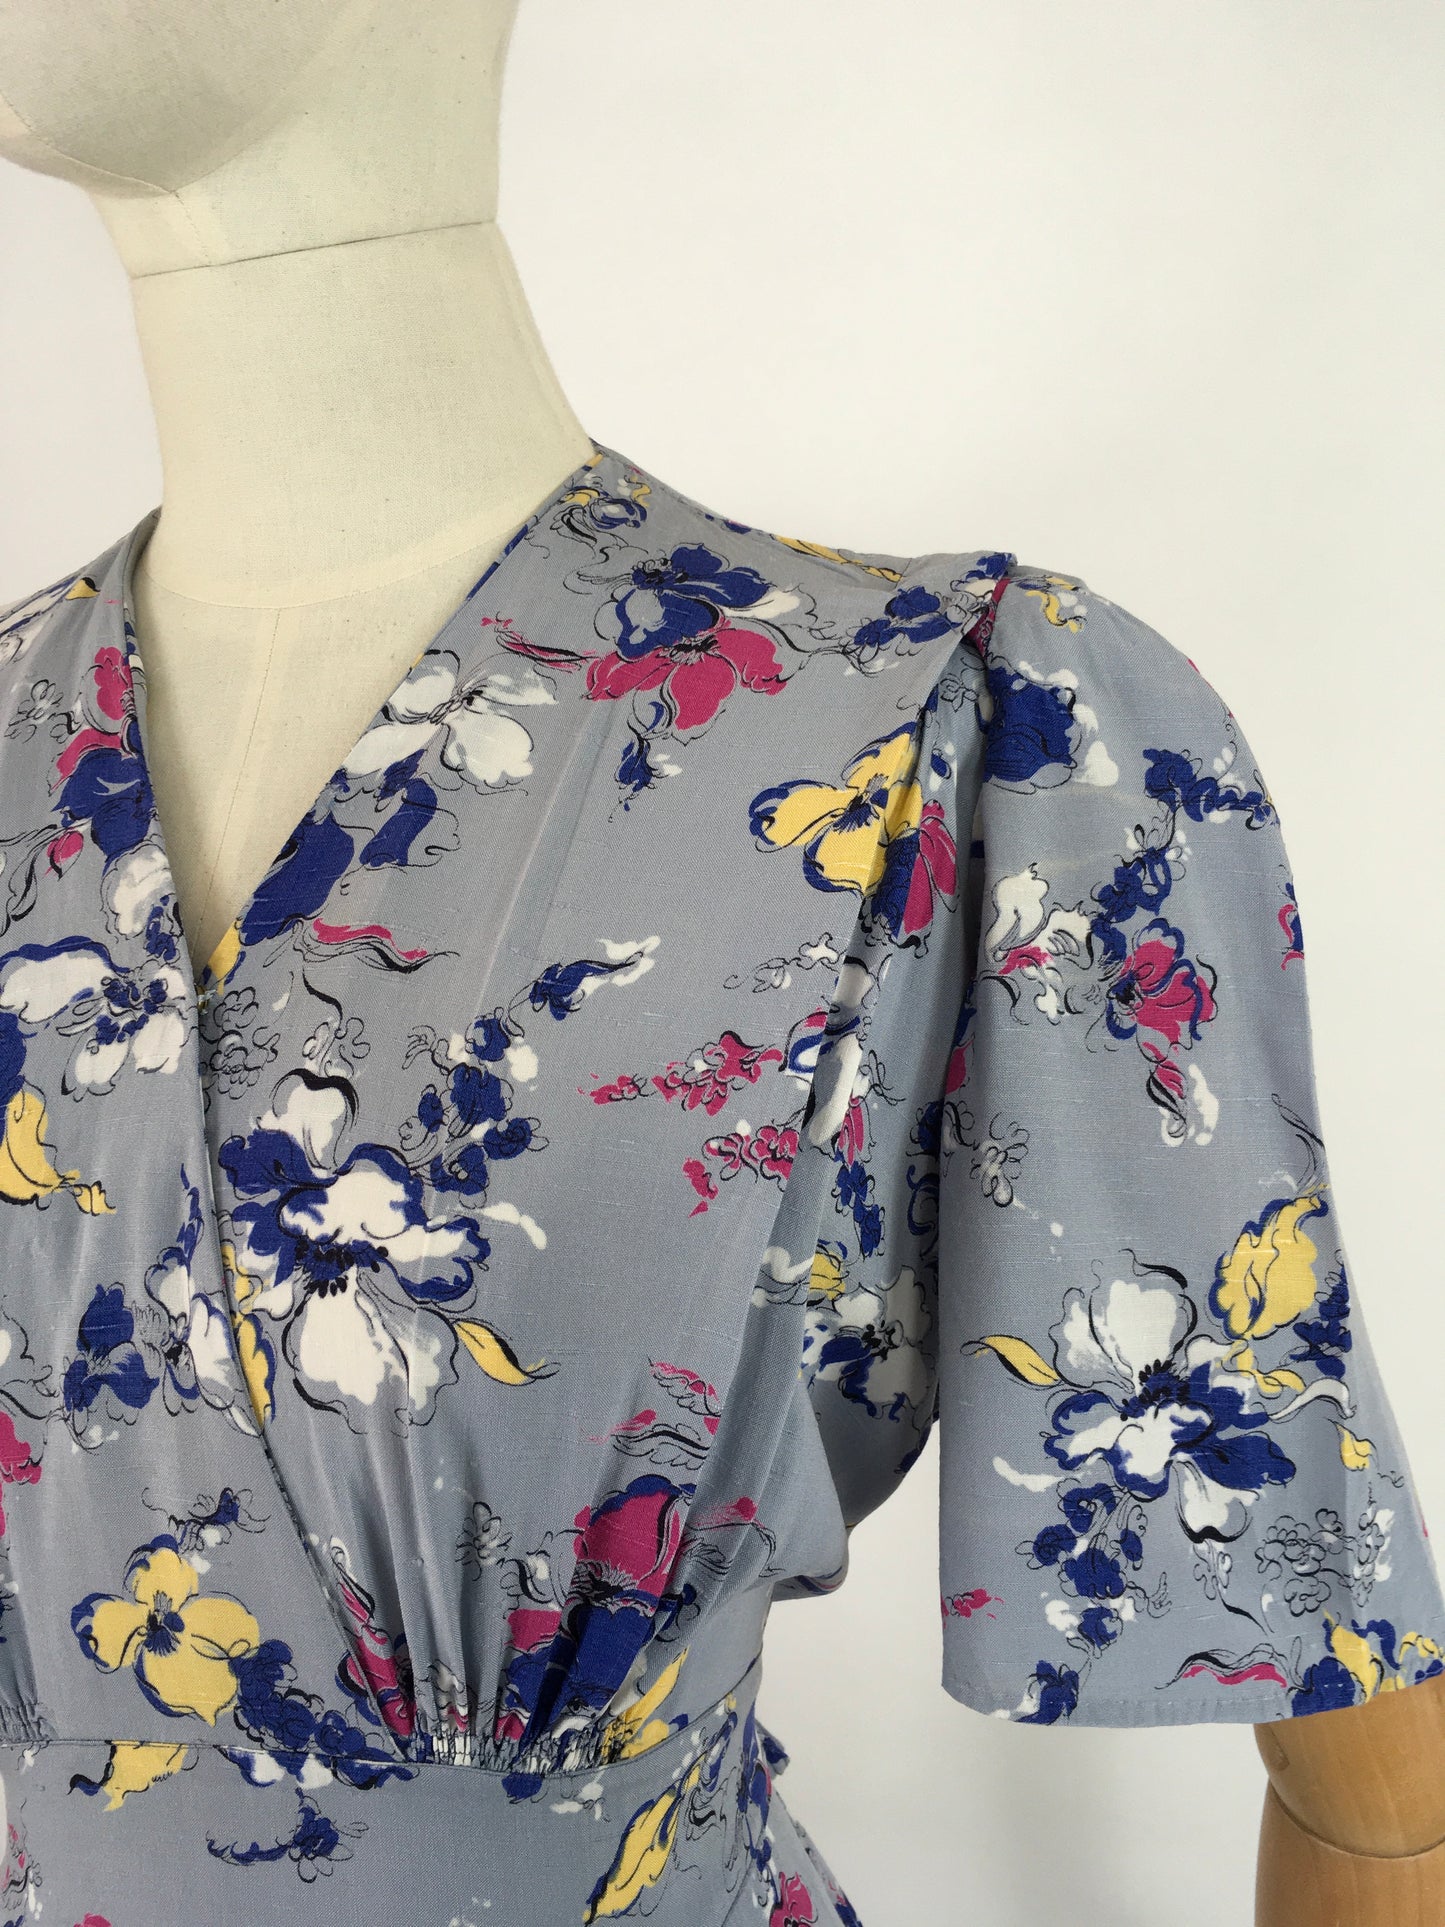 Original 1940s Cornflower Blue Floral Dress - With a Beautiful 40’s Silhouette